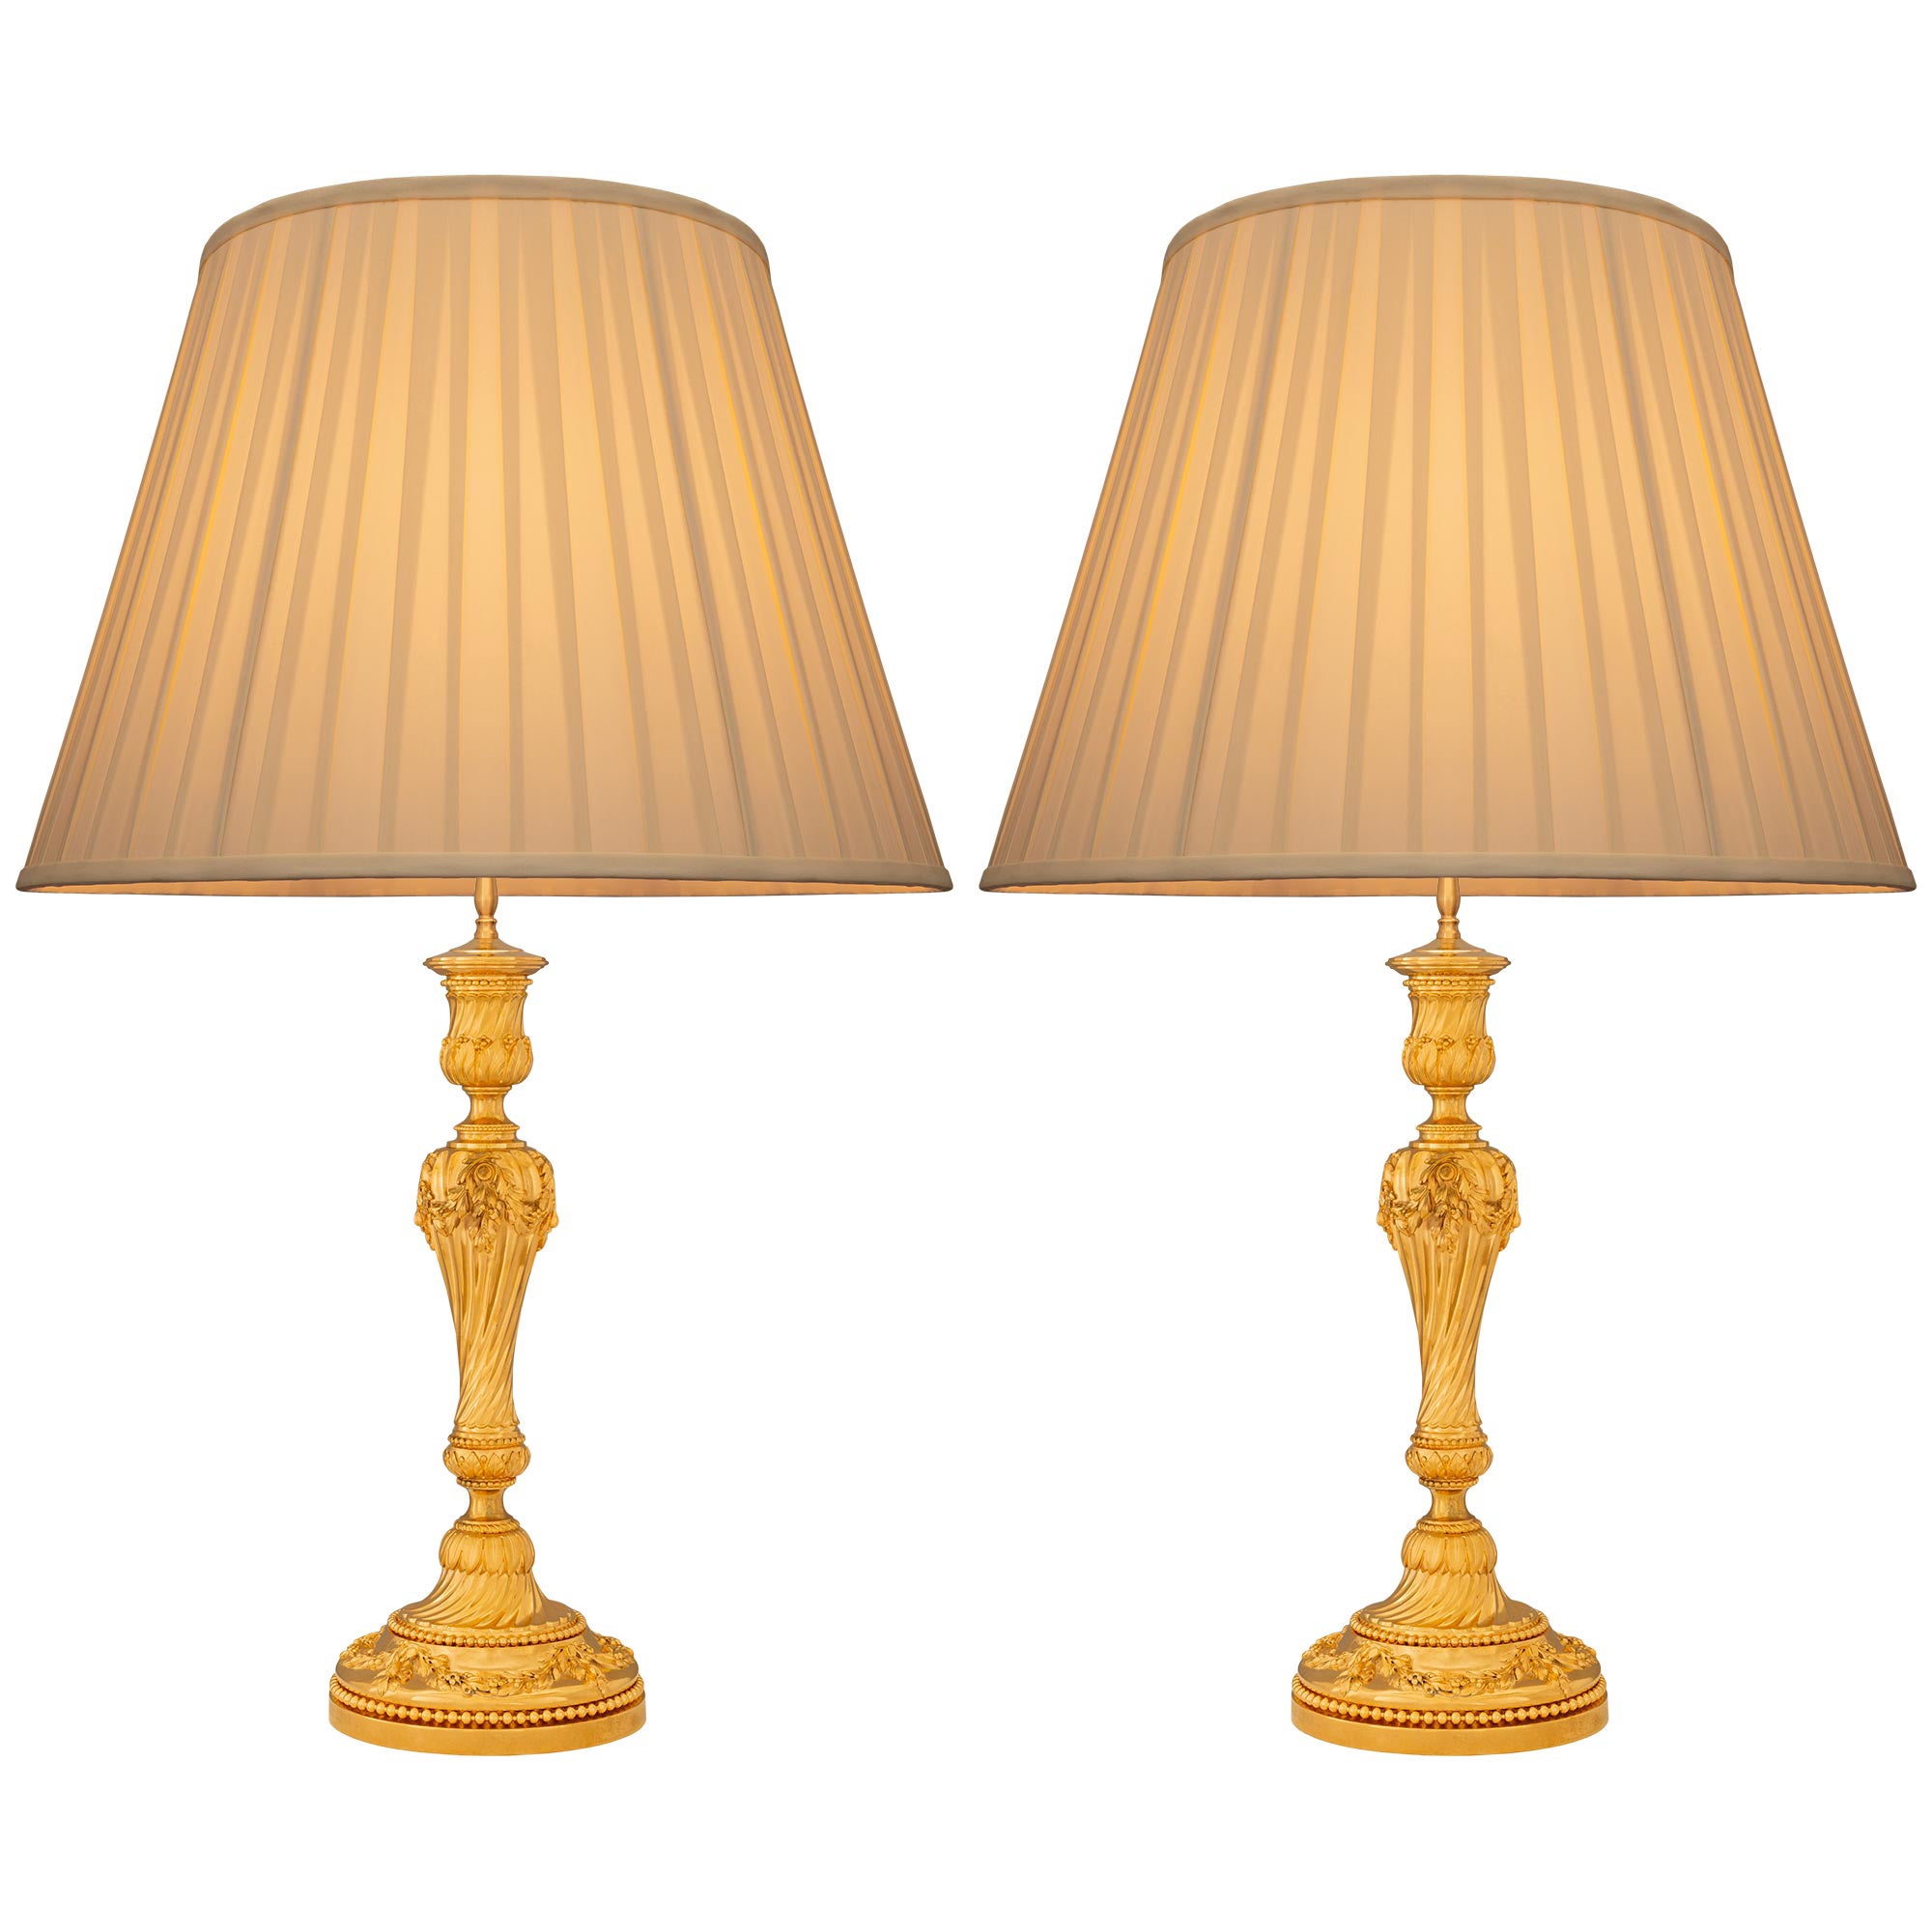 Pair Of French 19th Century Louis XVI St. Ormolu Lamps, Signed Gagneau Paris